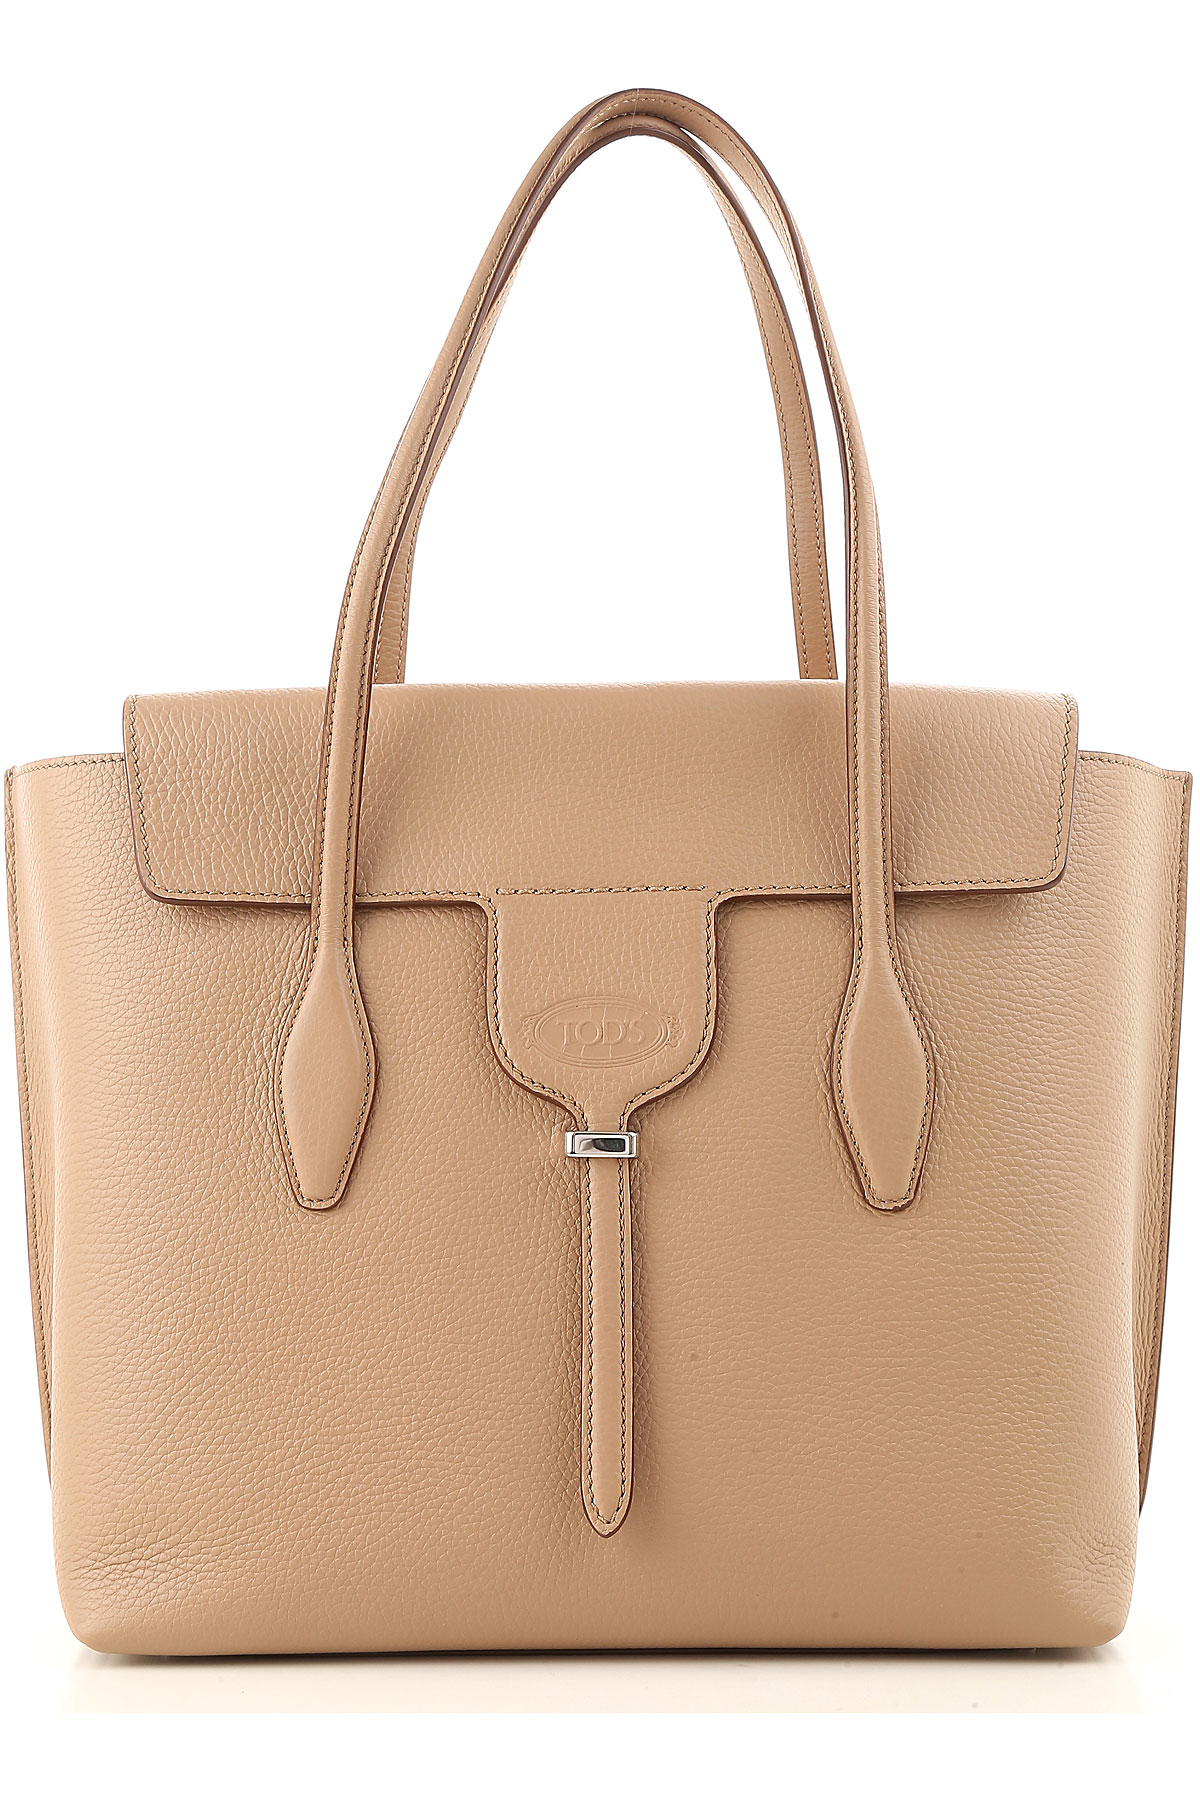 Handbags Tods, Style code: xbwanxa0300rias812--